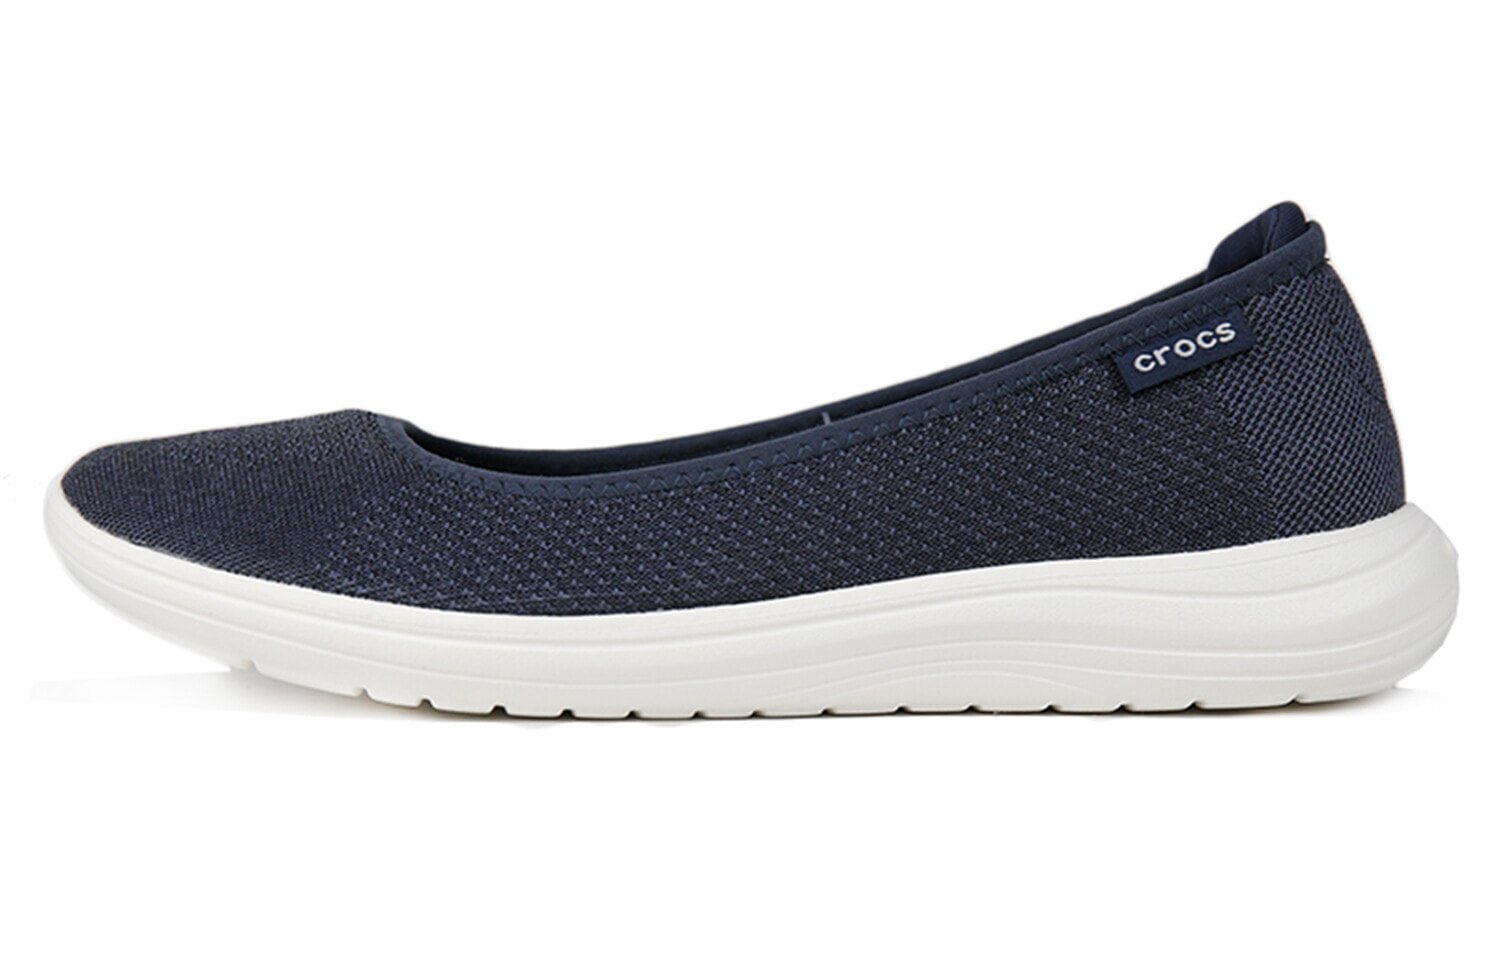 Crocs 舒适透气 复古运动休闲鞋 女款 蓝色 / Crocs 205880-462